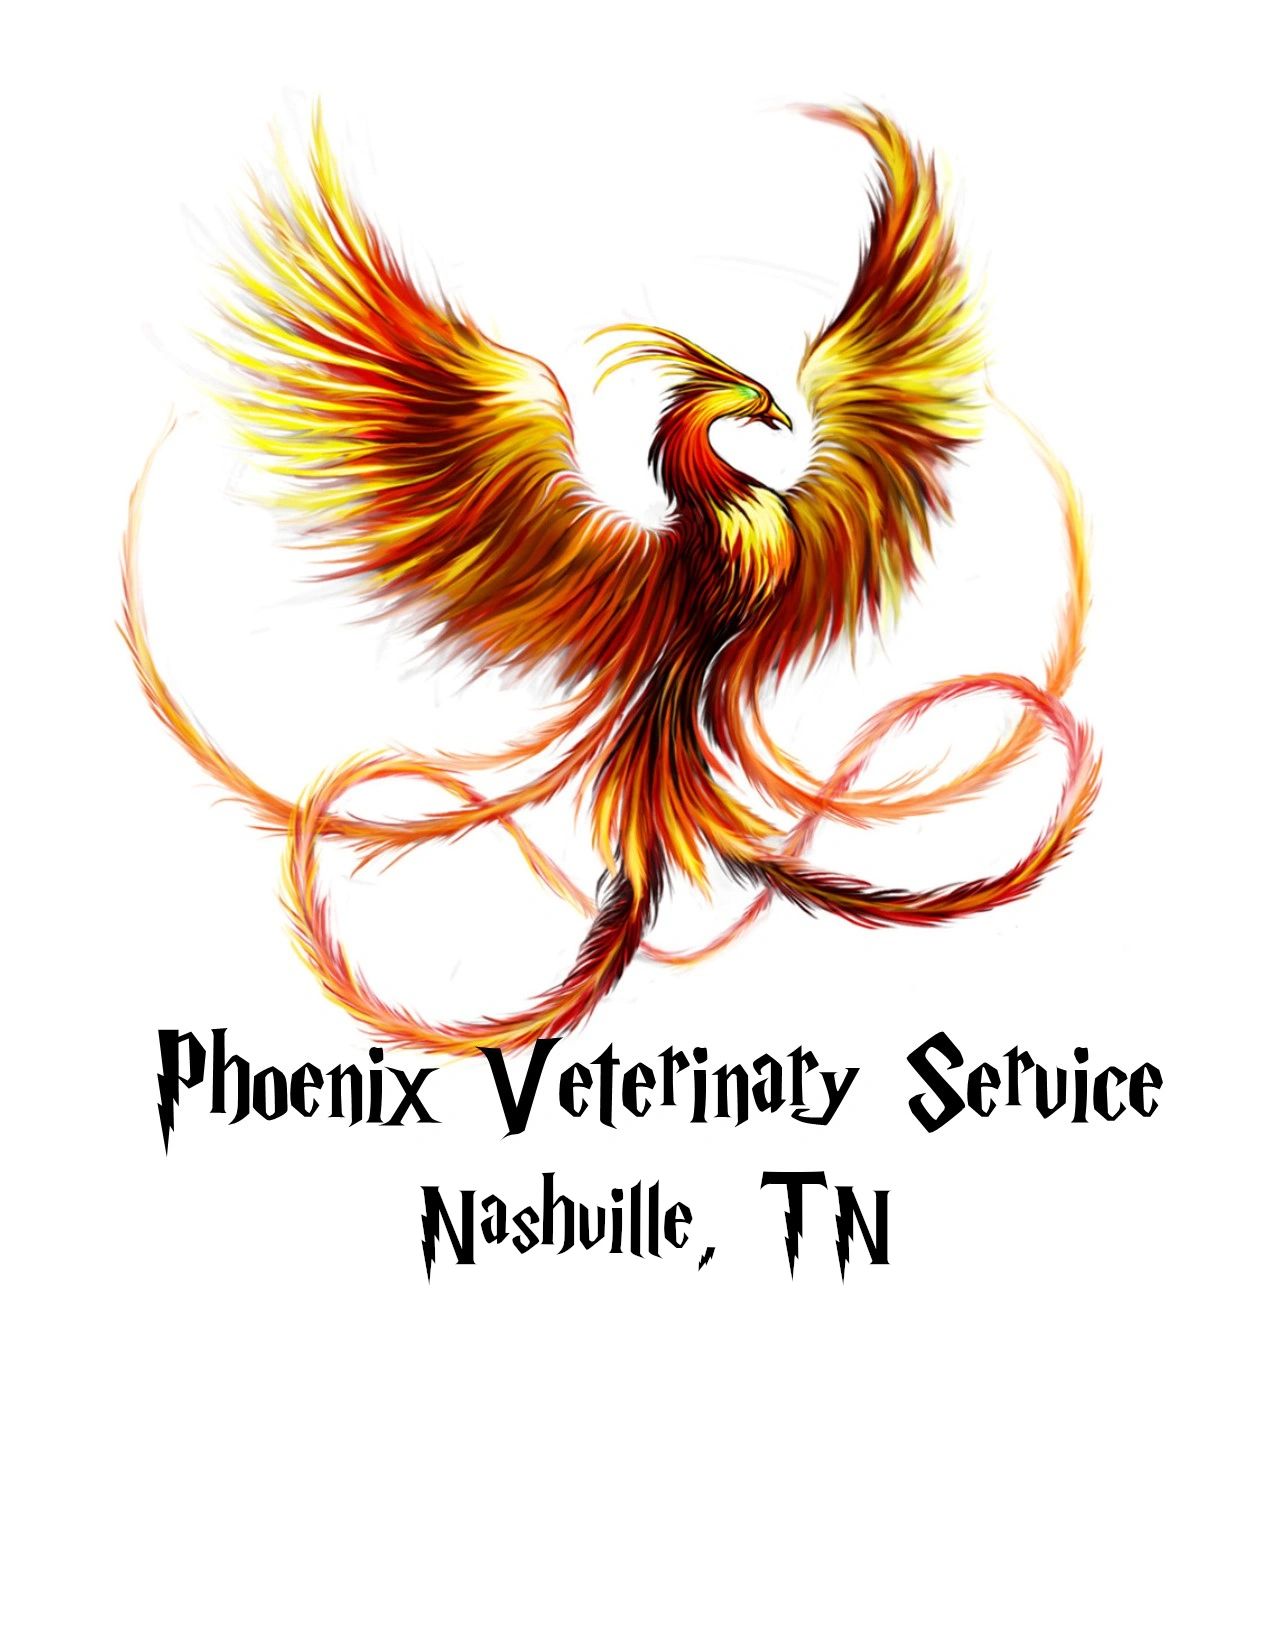 Phoenix Veterinary Service: Mobile Vet Nashville, TN